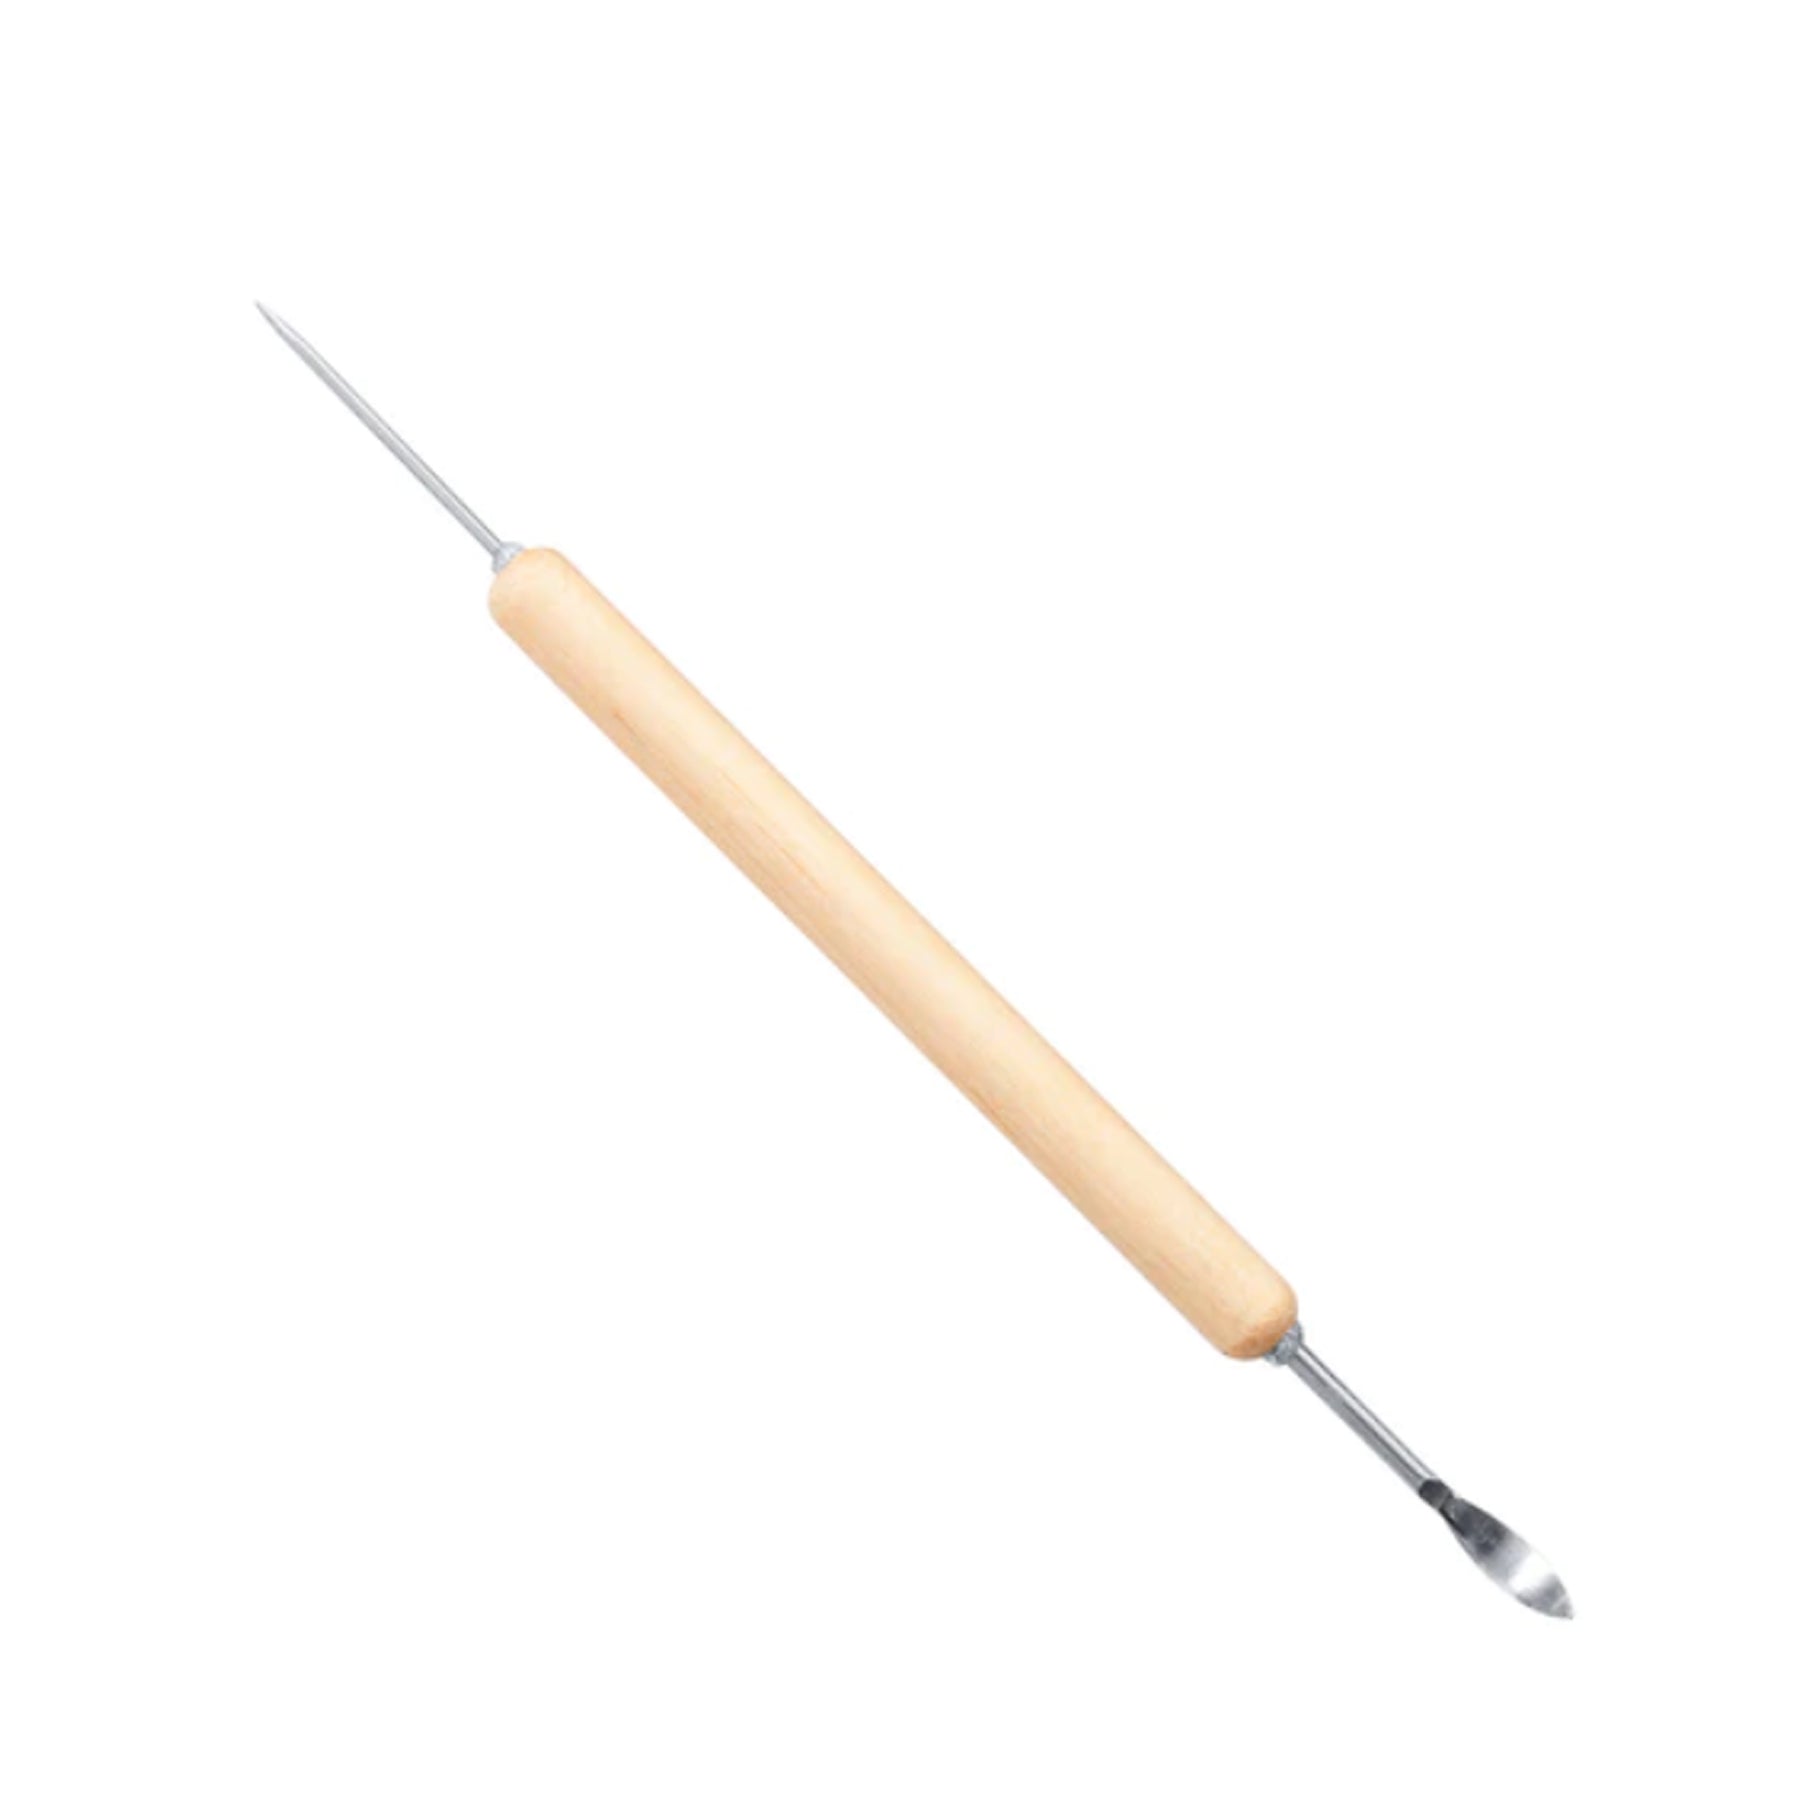 Pro Needle 6 1/8 in. needle tool